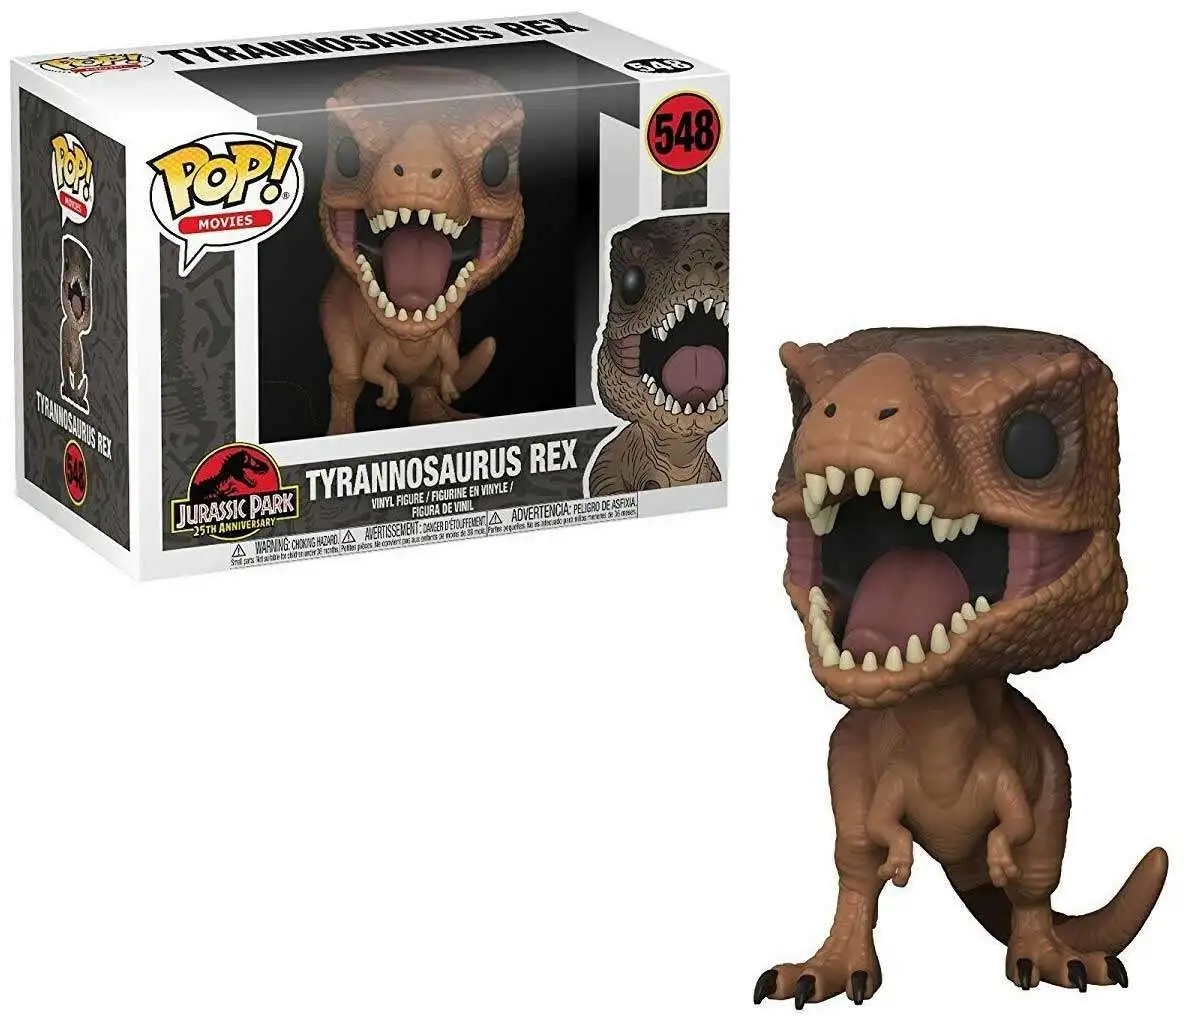 Jurassic Park Movie Tyrannosaurus Rex Vinyl POP Figure Toy #548 FUNKO NEW MIB 